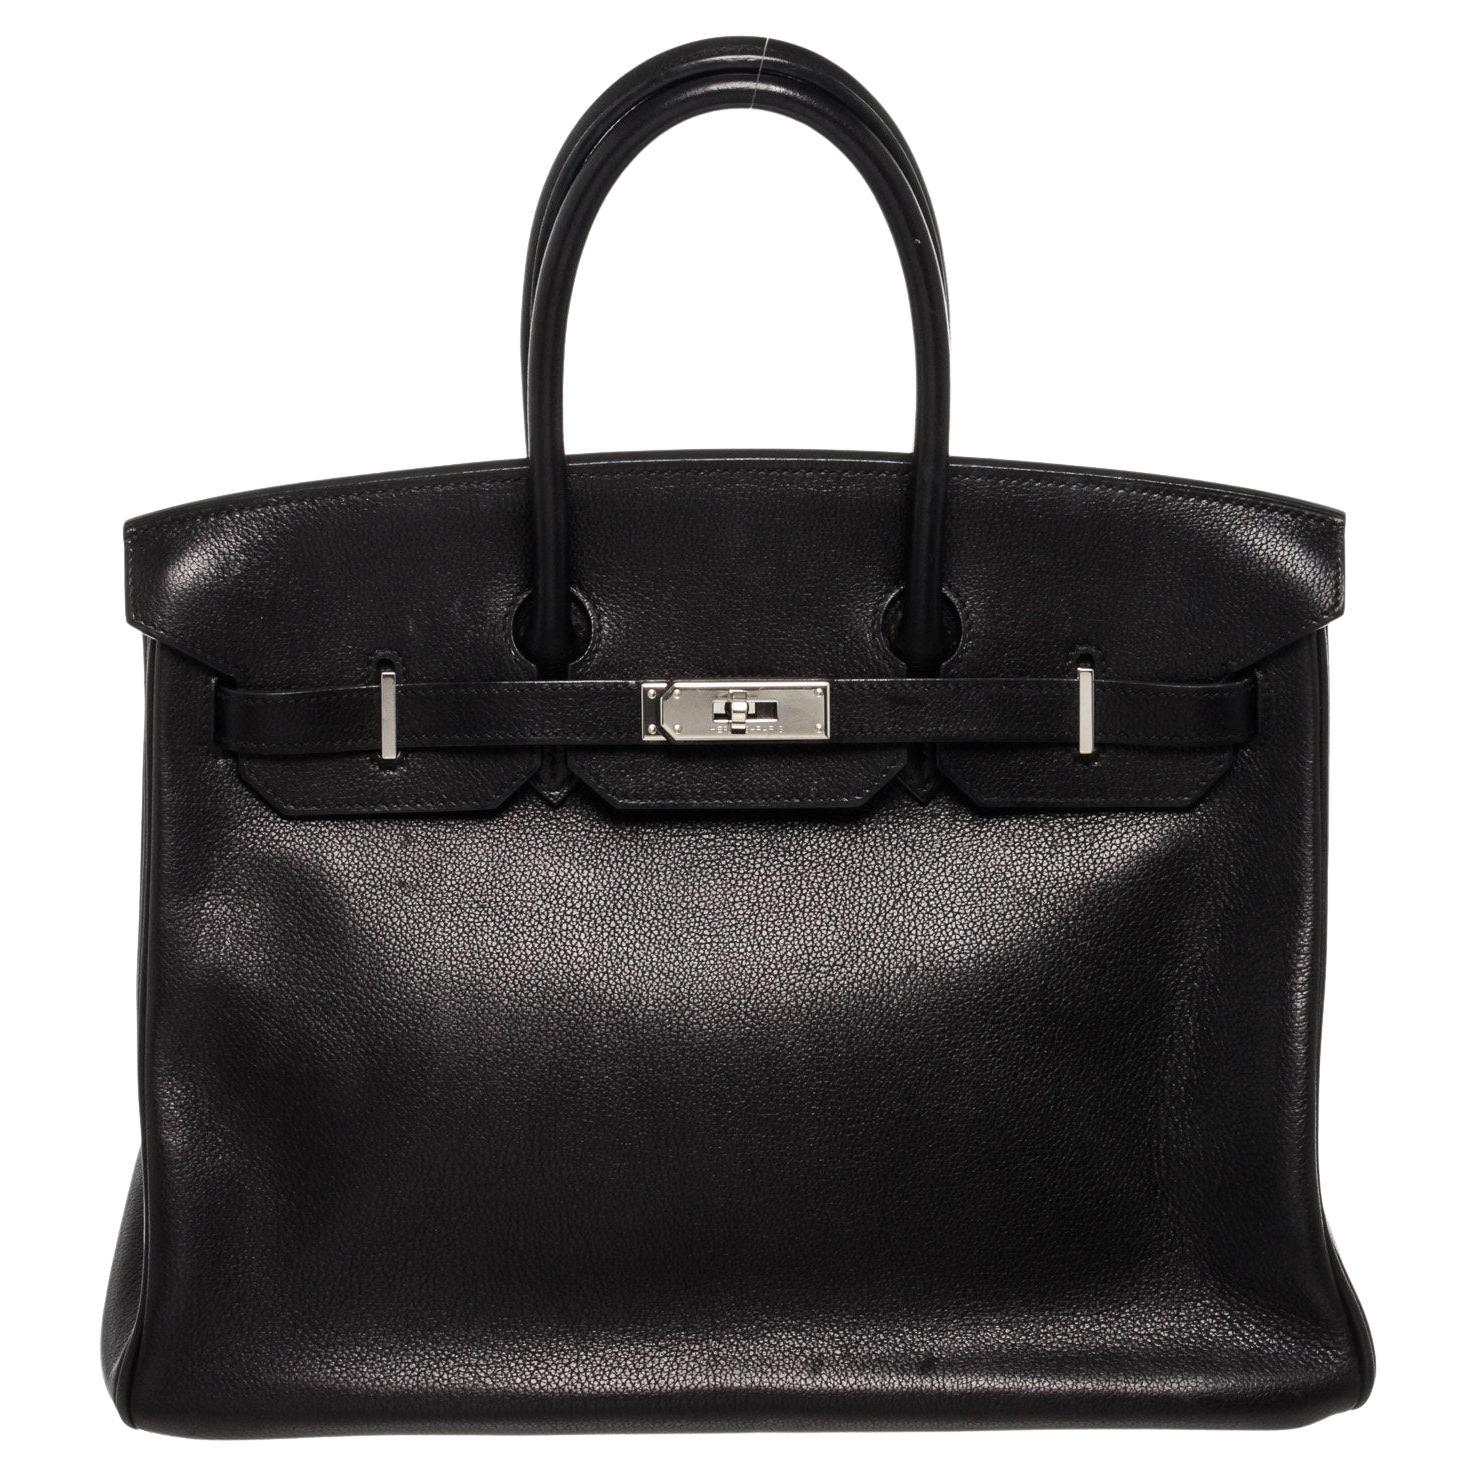 Hermes Black Leather Birkin 35cm Satchel Bag